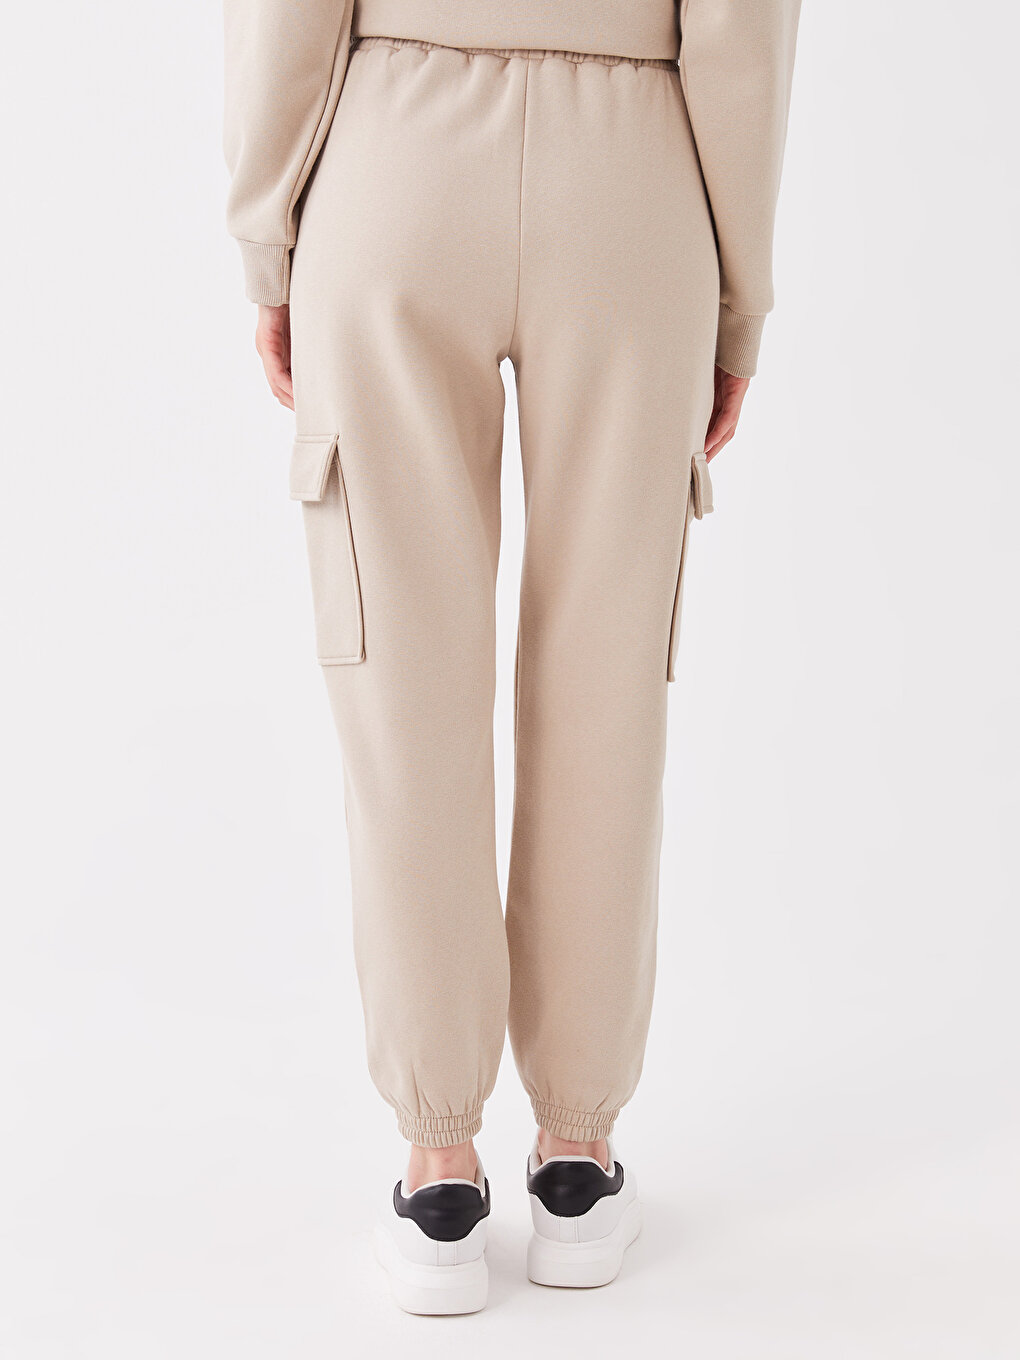 YWDJ Dressy Joggers for Women Women Casual Solid Cotton Linen Drawstring  Elastic Waist Calf Length Pencil Pants Beige S 